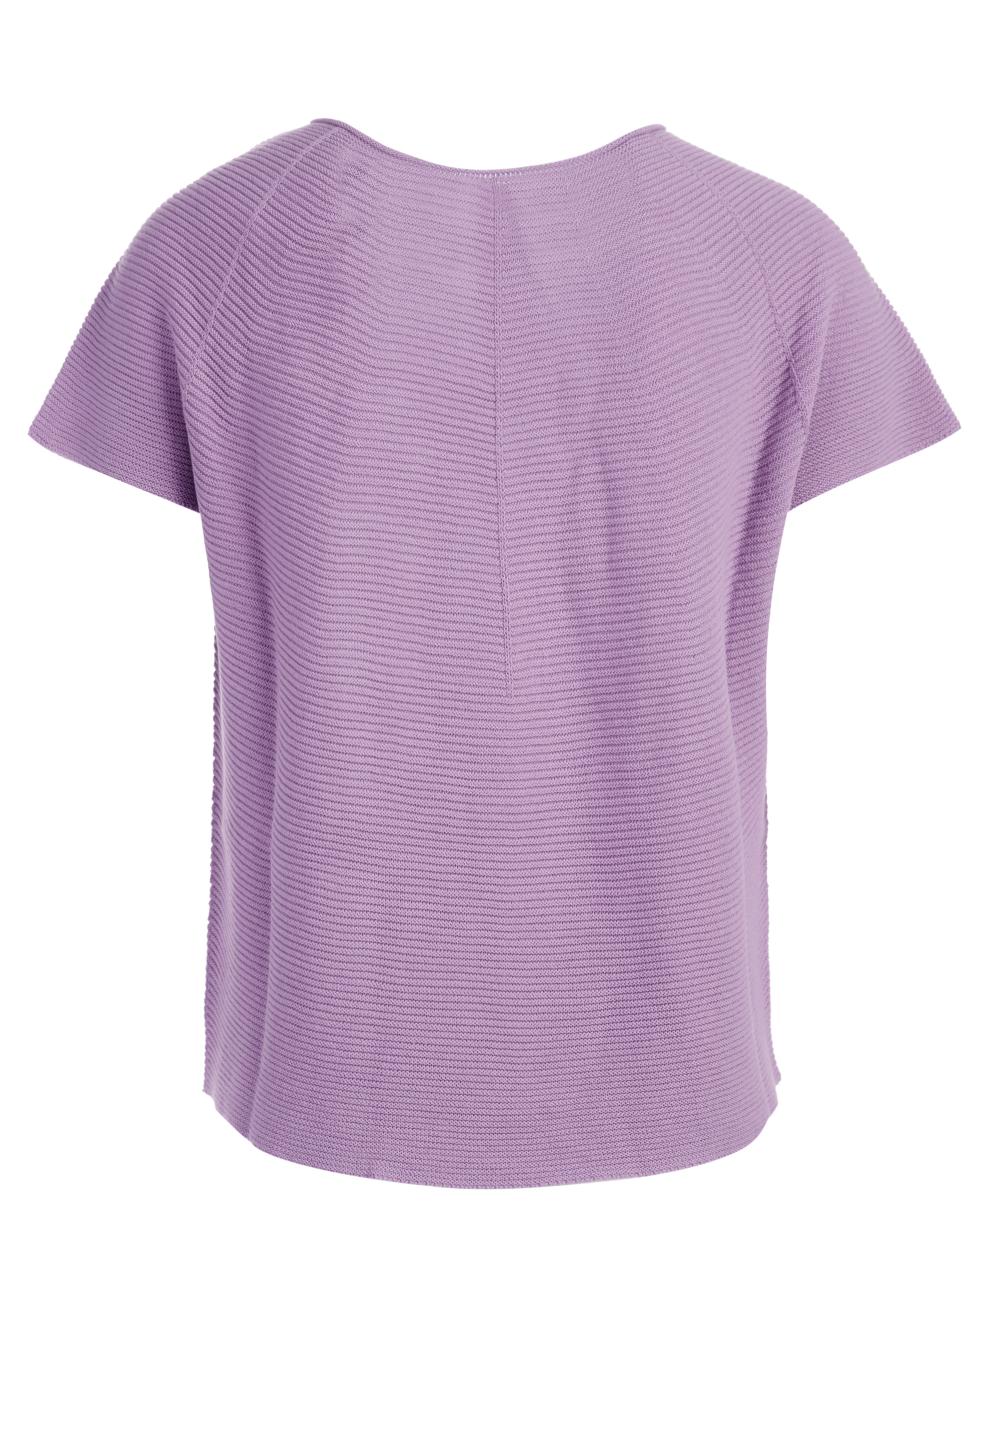 Short sleeve pullover in Purple